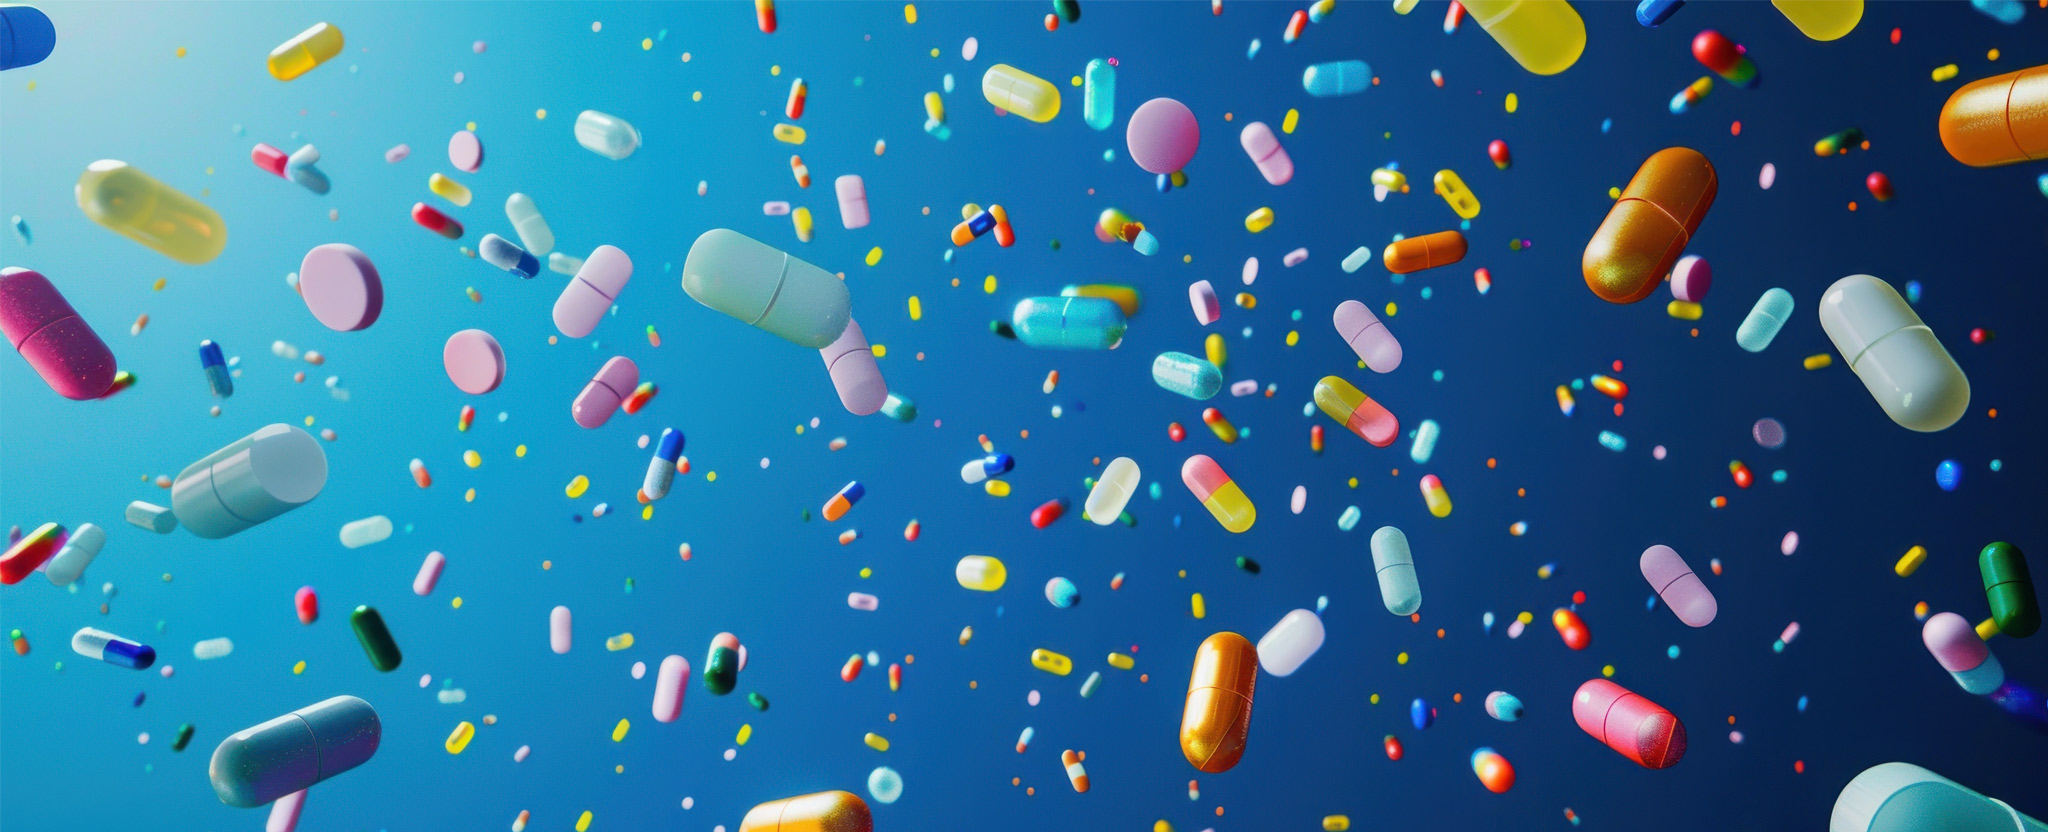 Are Hidden Ingredients in Pills Making You Sicker?